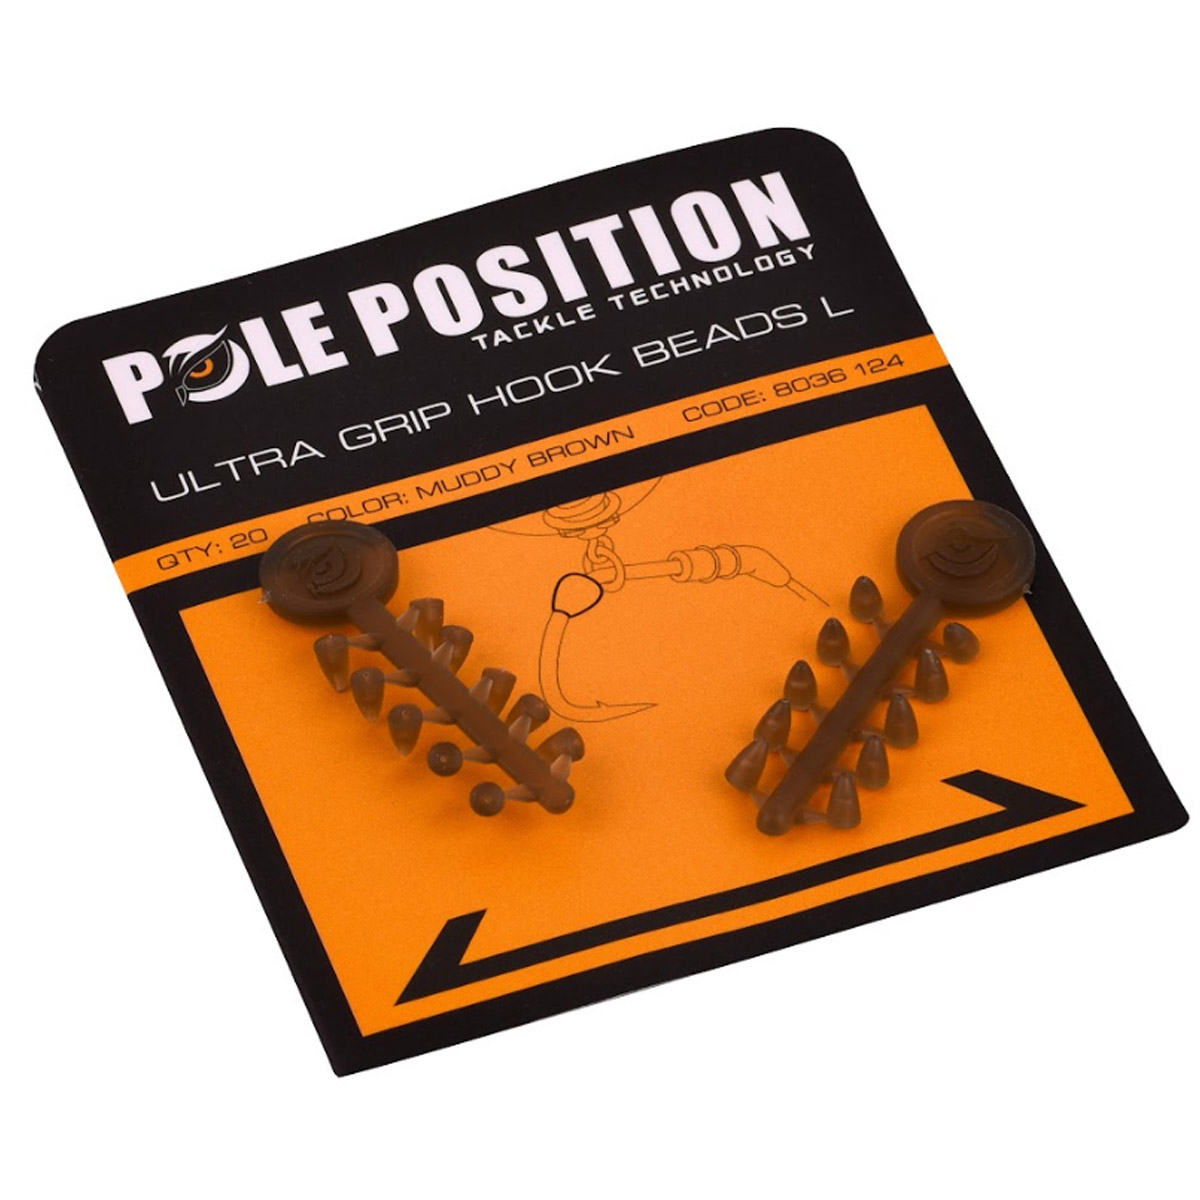 Pole Position Ultra Grip Hook Beads